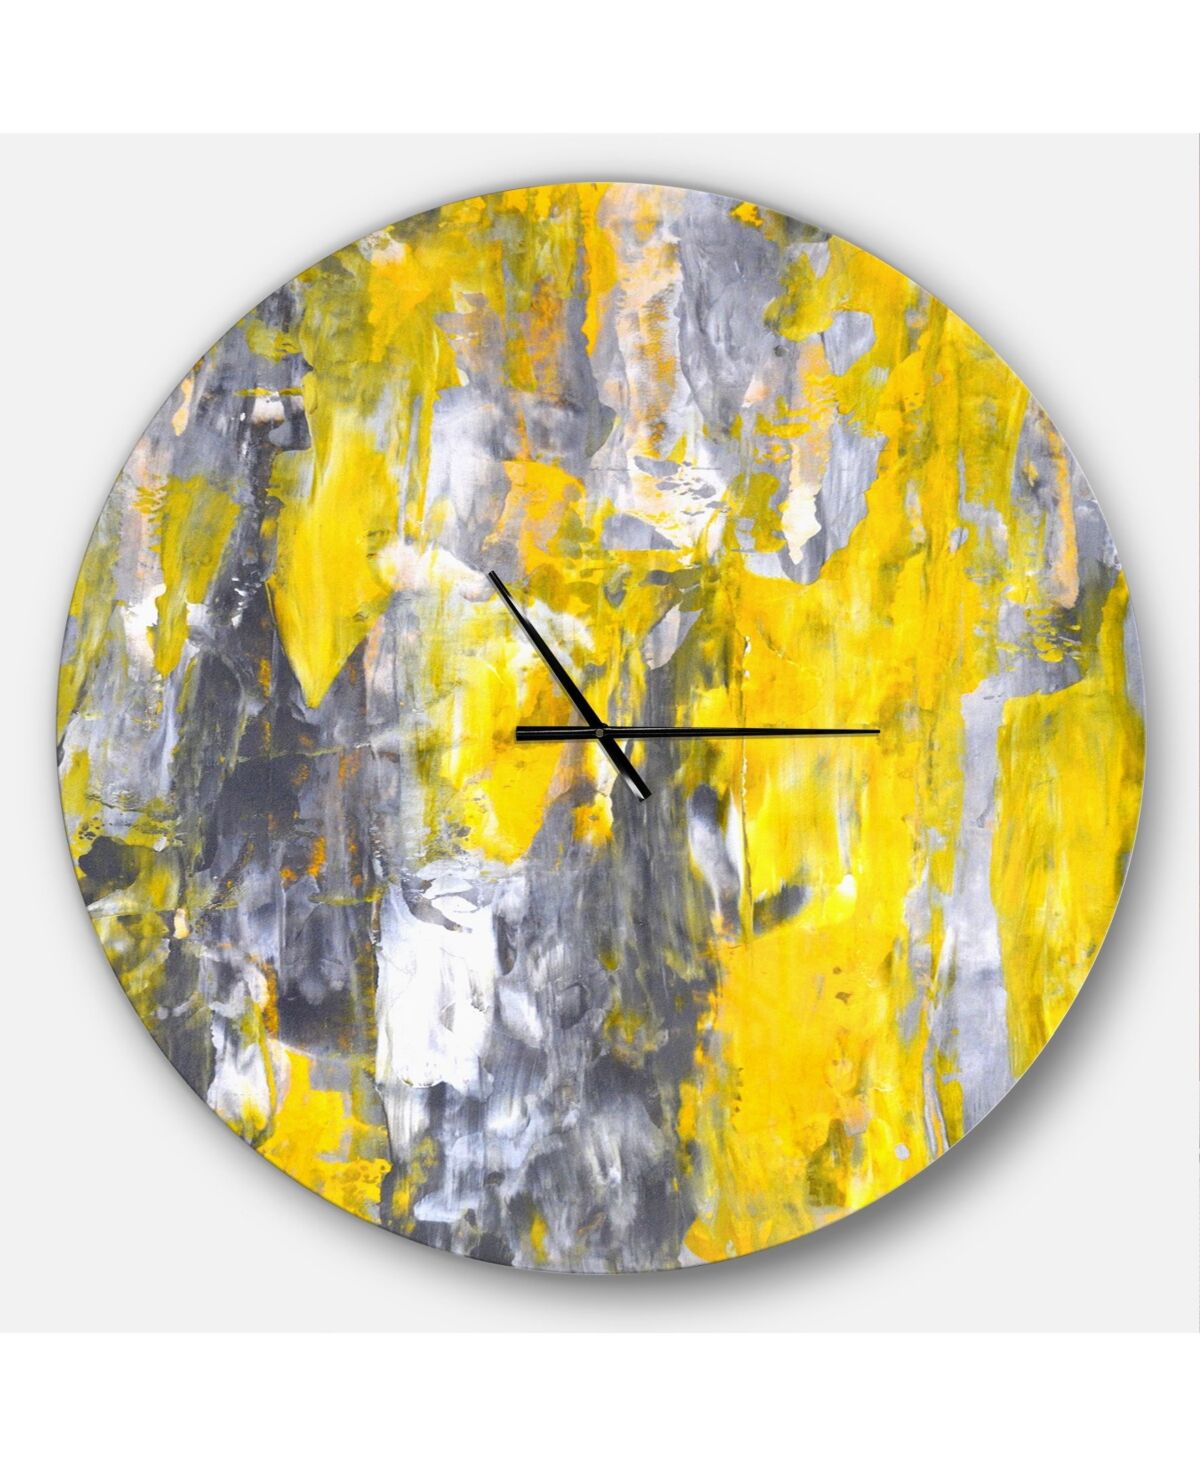 Design Art Designart Oversized Modern Round Metal Wall Clock - 36 x 36 - Yellow